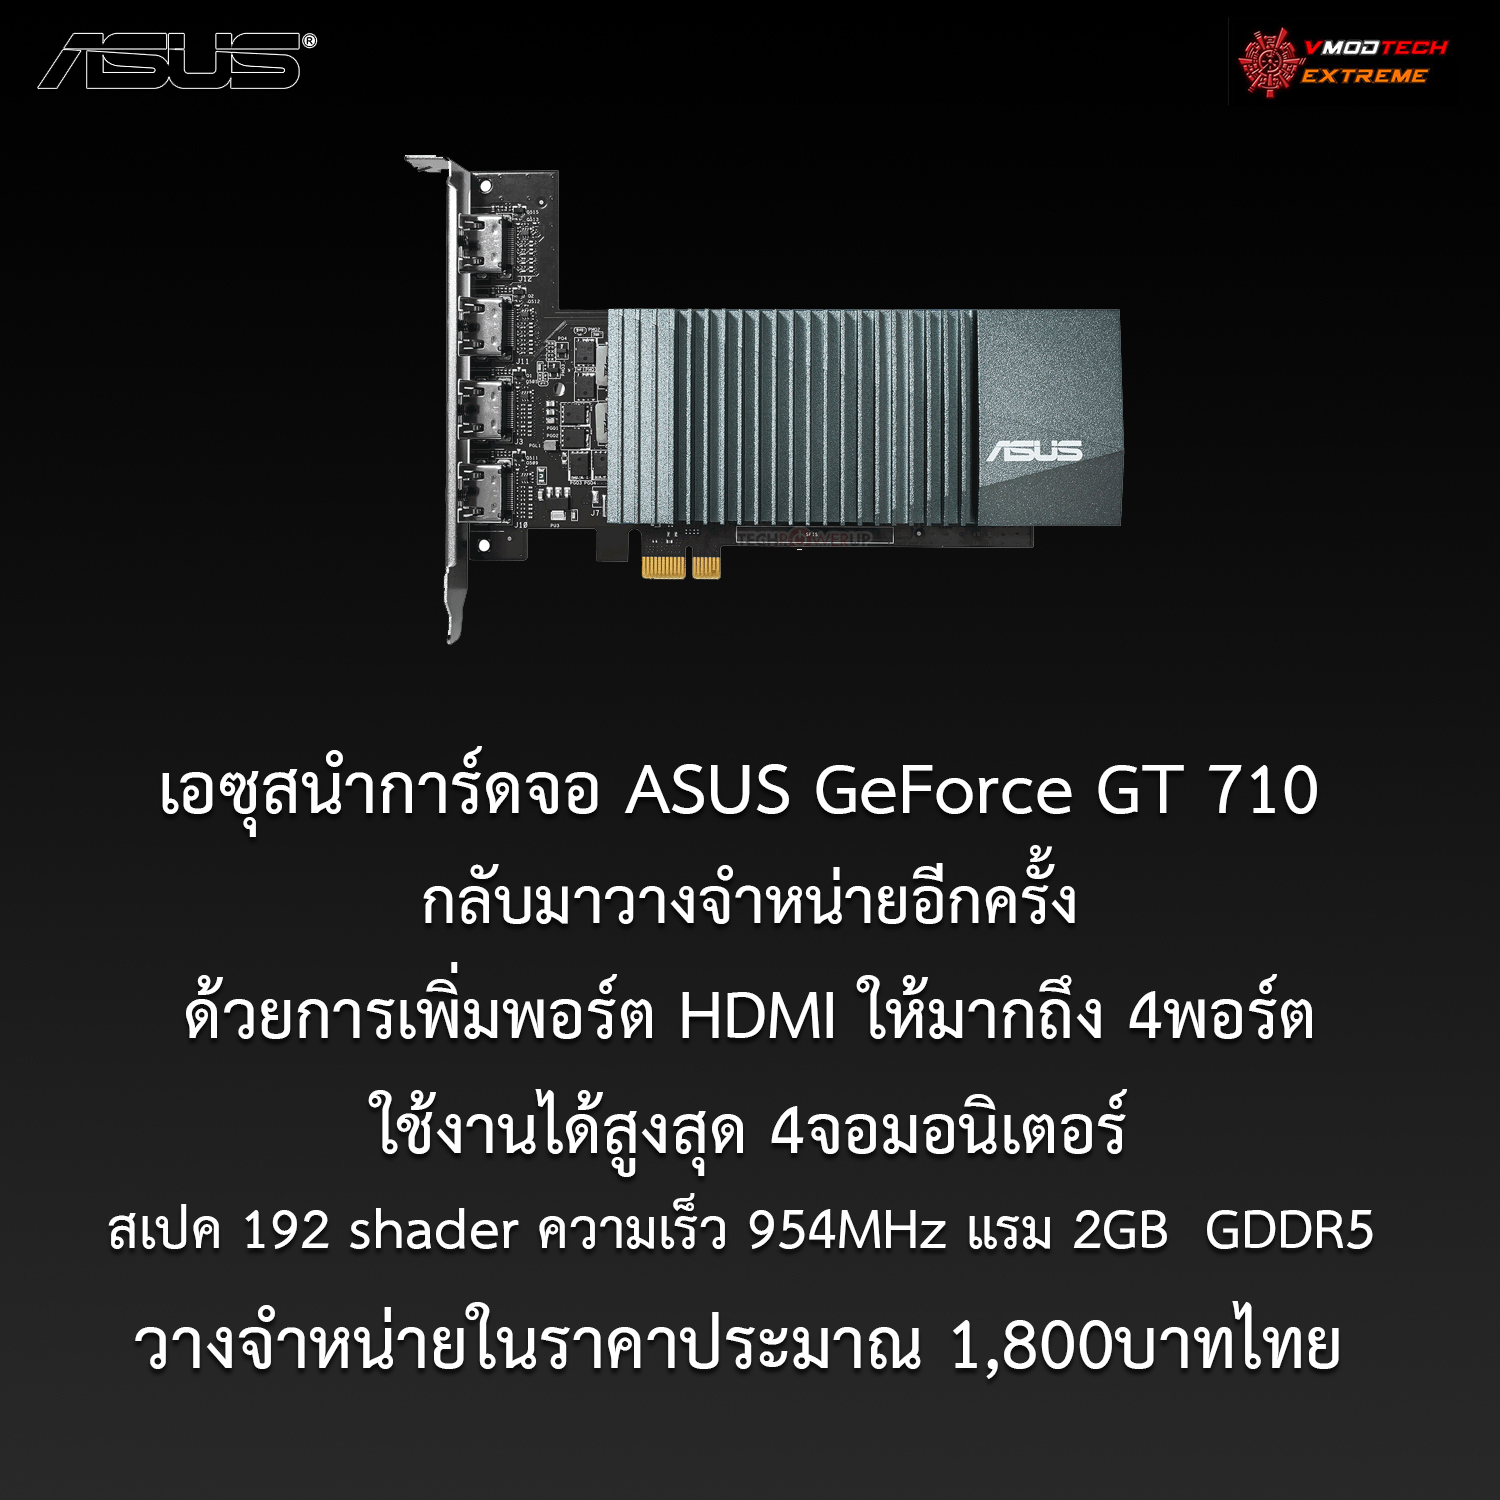 asus geforce gt 710 เอซุสนำการ์ดจอ ASUS GeForce GT 710 กลับมาวางจำหน่ายอีกครั้งด้วยการเพิ่มพอร์ต HDMI ให้มากถึง 4พอร์ตกันเลยทีเดียว 